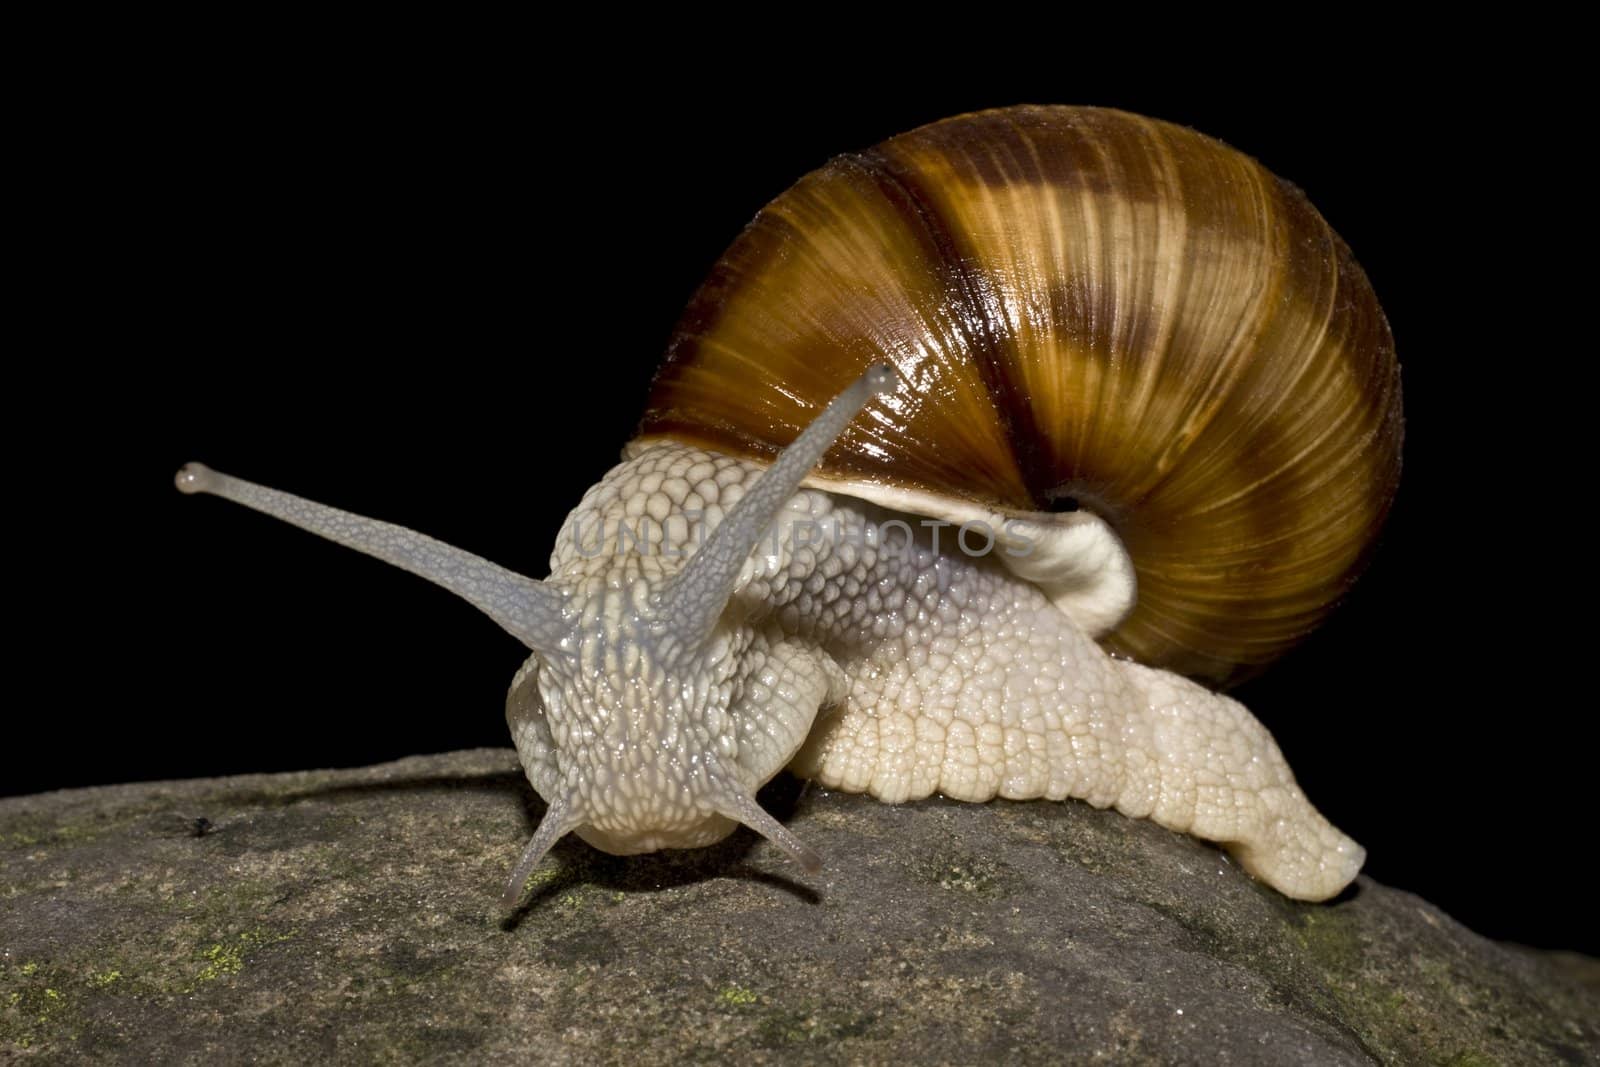 snail in black background by gewoldi